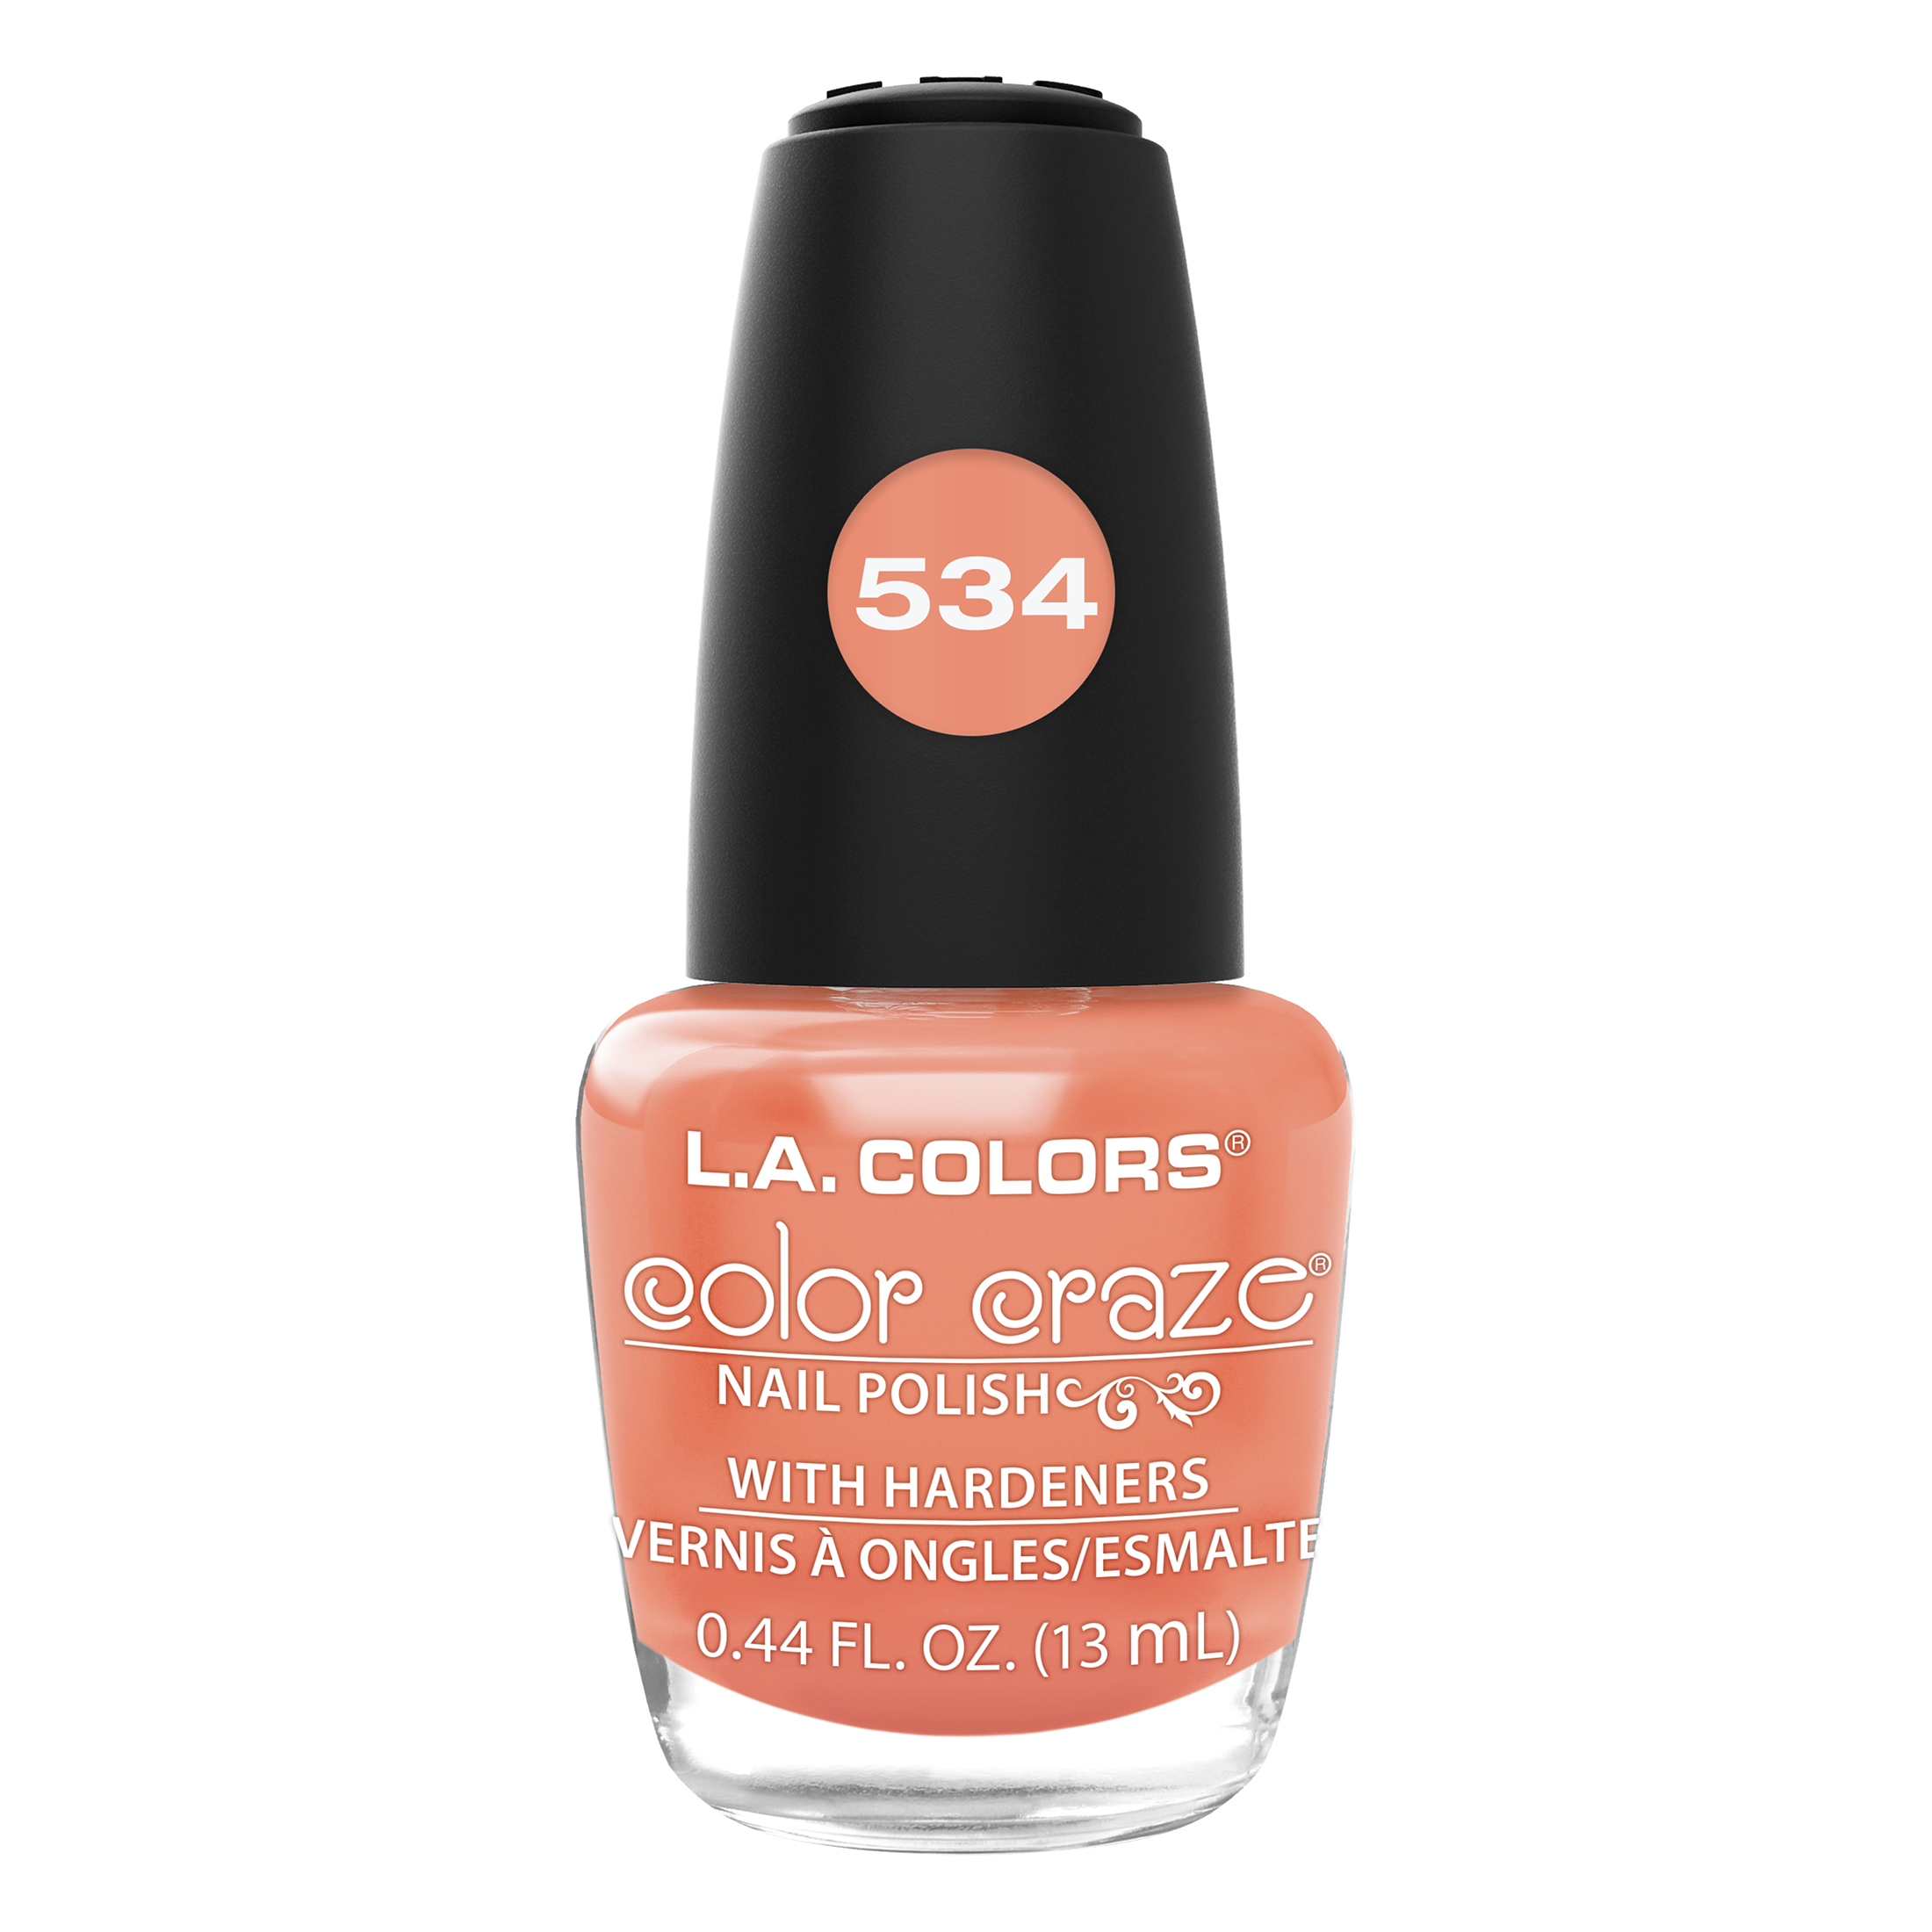 L.A. COLORS Color Craze Nail Polish, Hottie, 0.44 fl oz - image 1 of 6